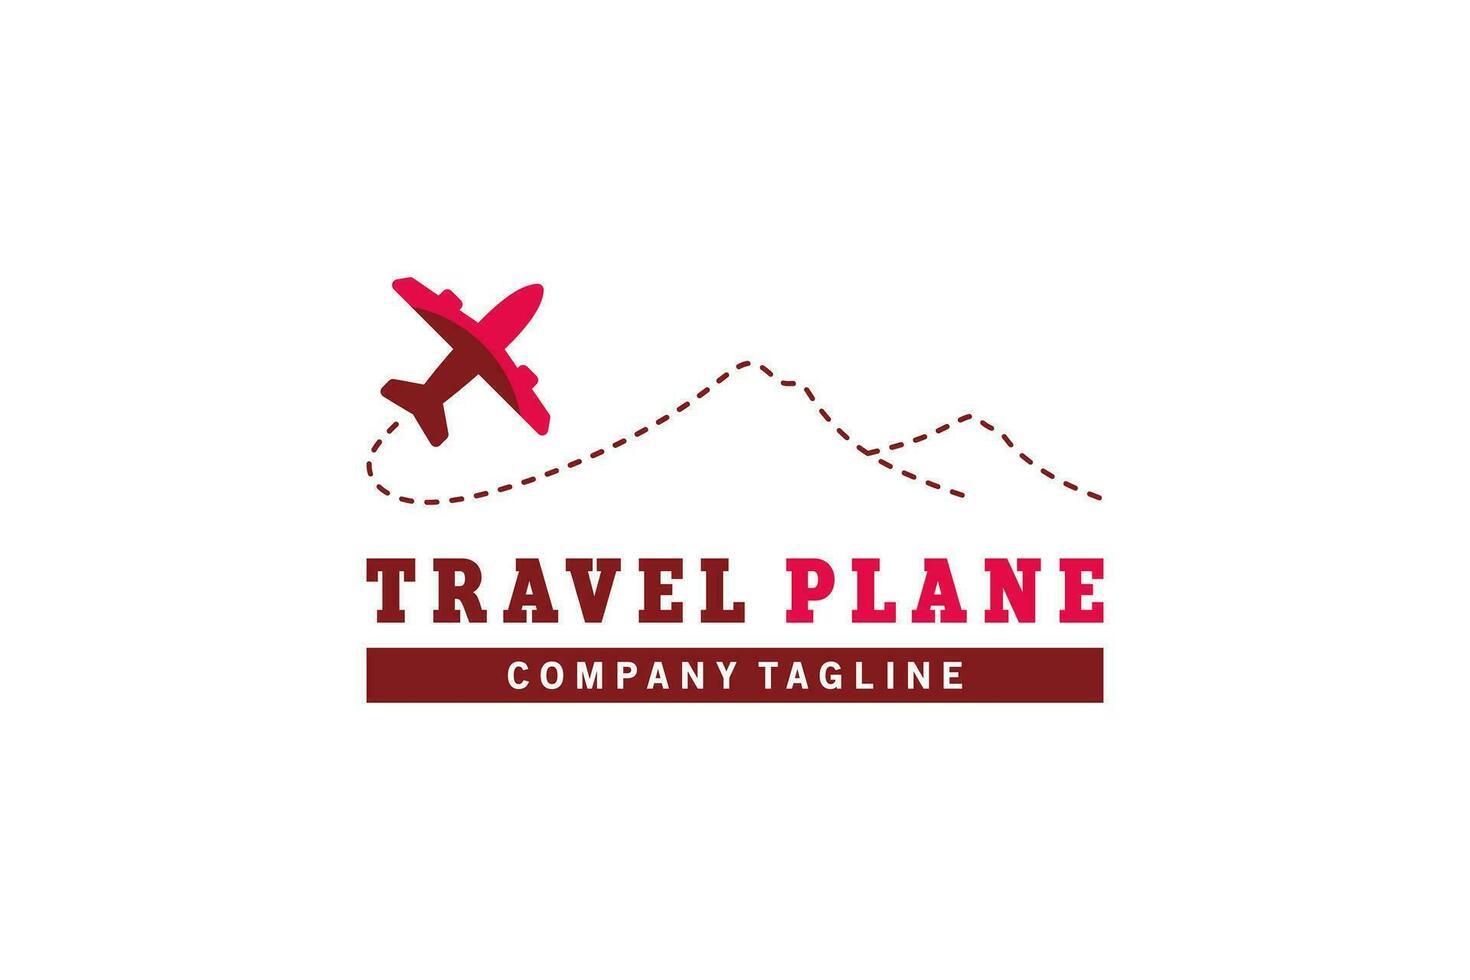 Airplane travel logo template design with mountain concept vector